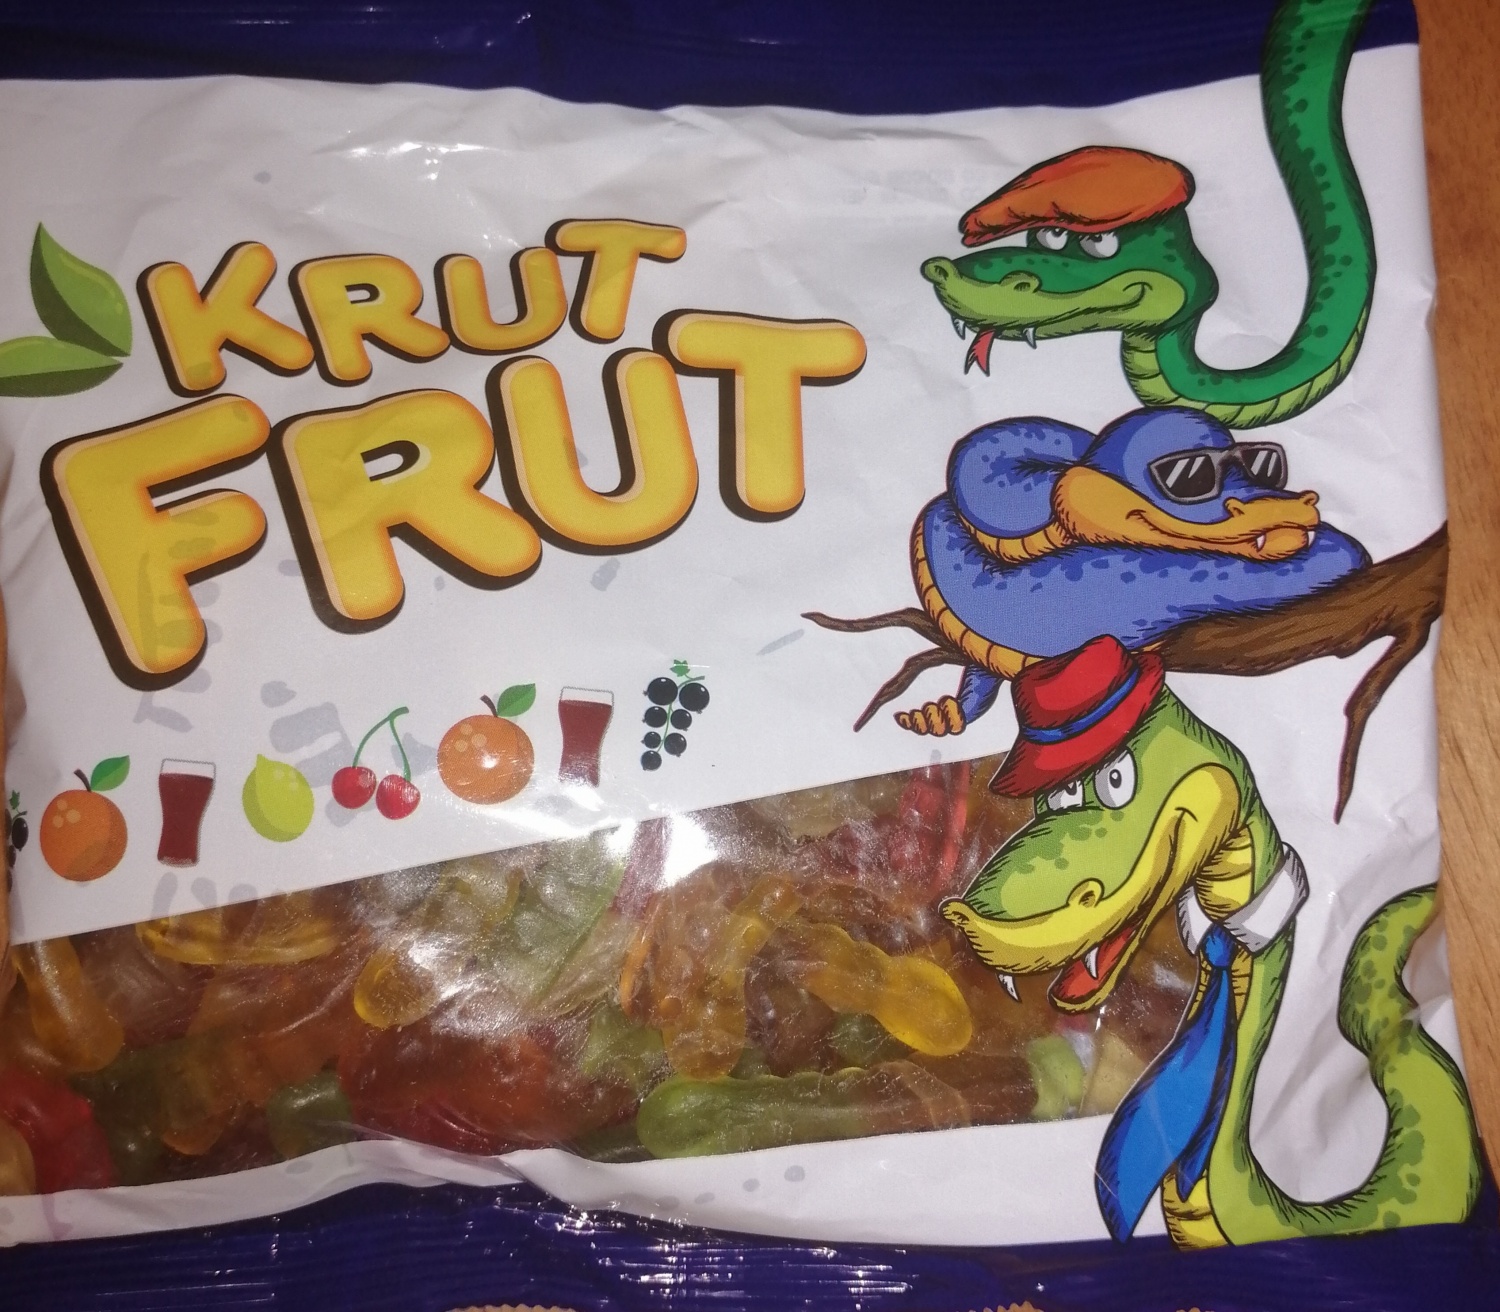 Krut frut червяки